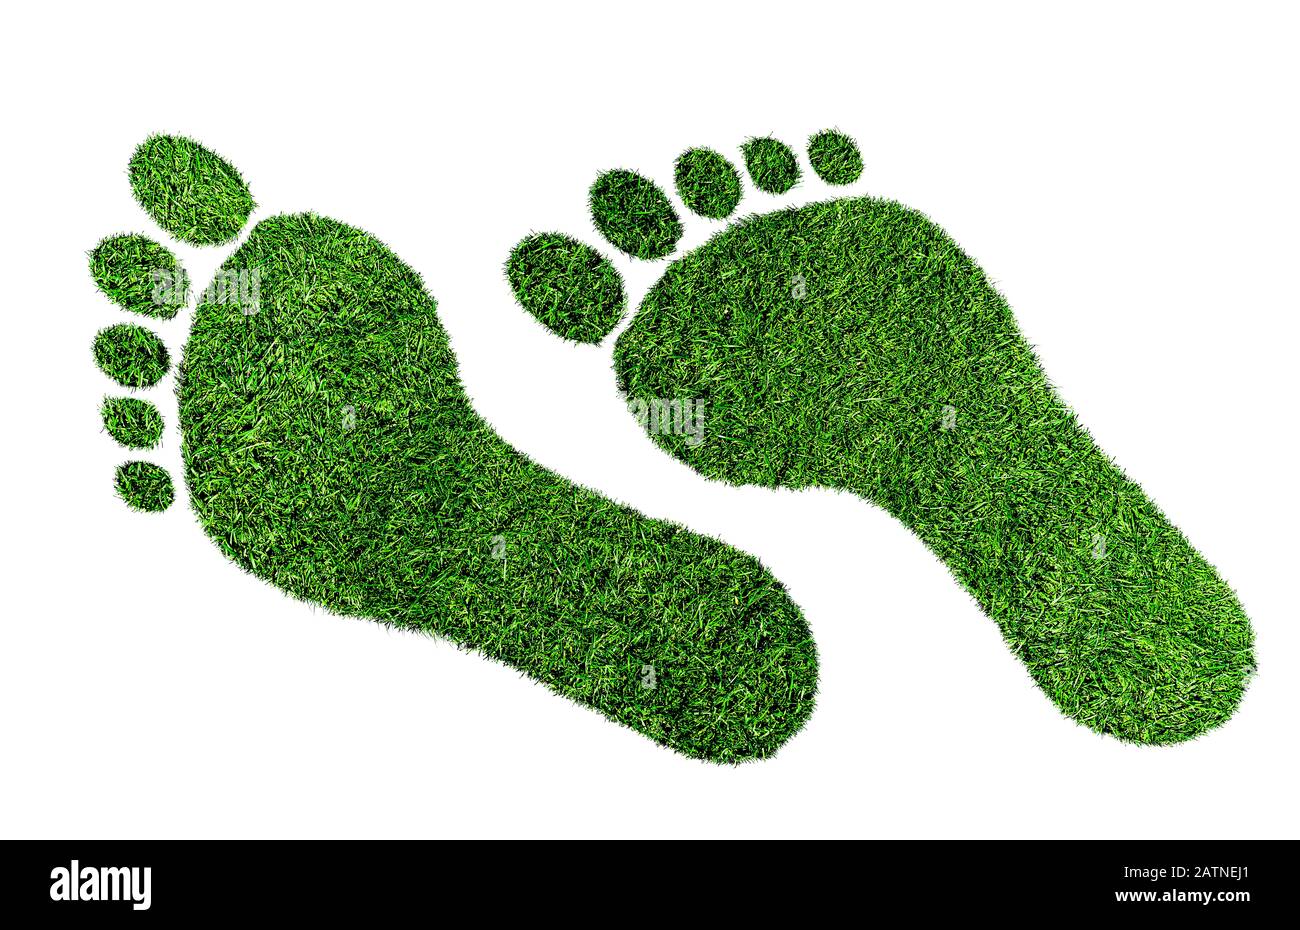 concepto de huella ecológica, huella descalza hecha de hierba verde exuberante aislada sobre fondo blanco Foto de stock